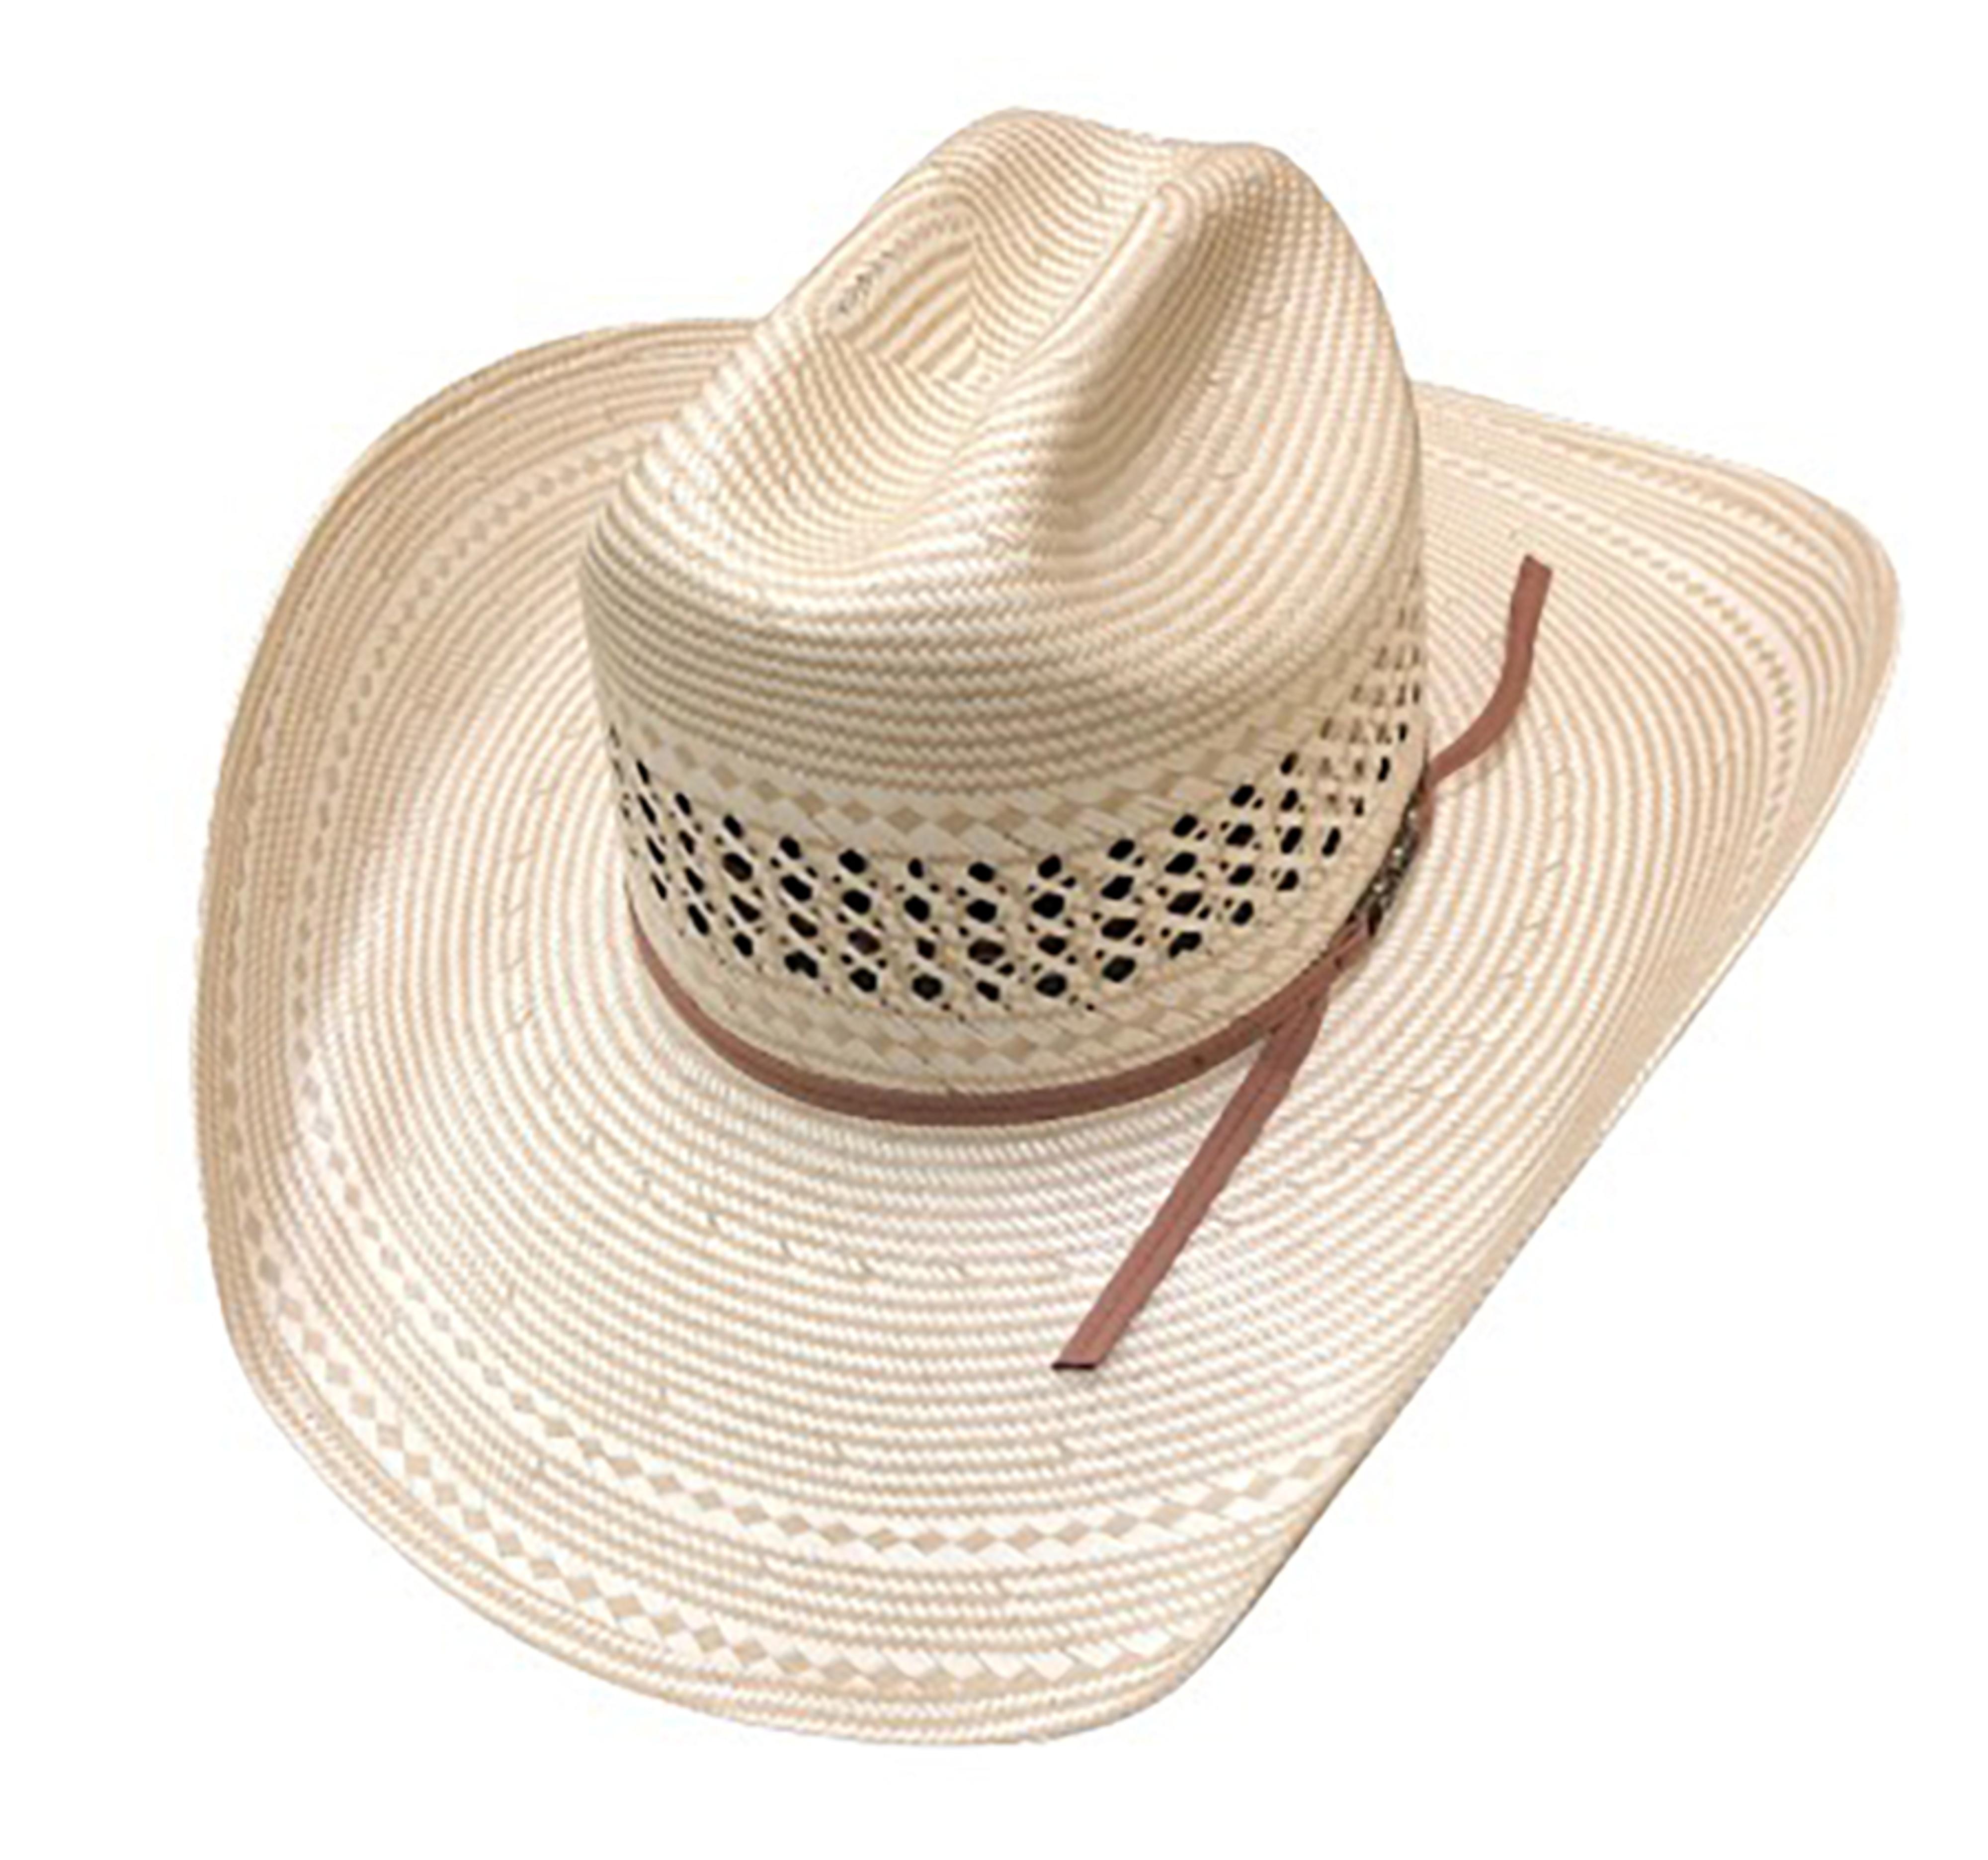 Hat 7700 Rancher 4.25-inch Rancher Brim USA Straw Hat Renegade Stores